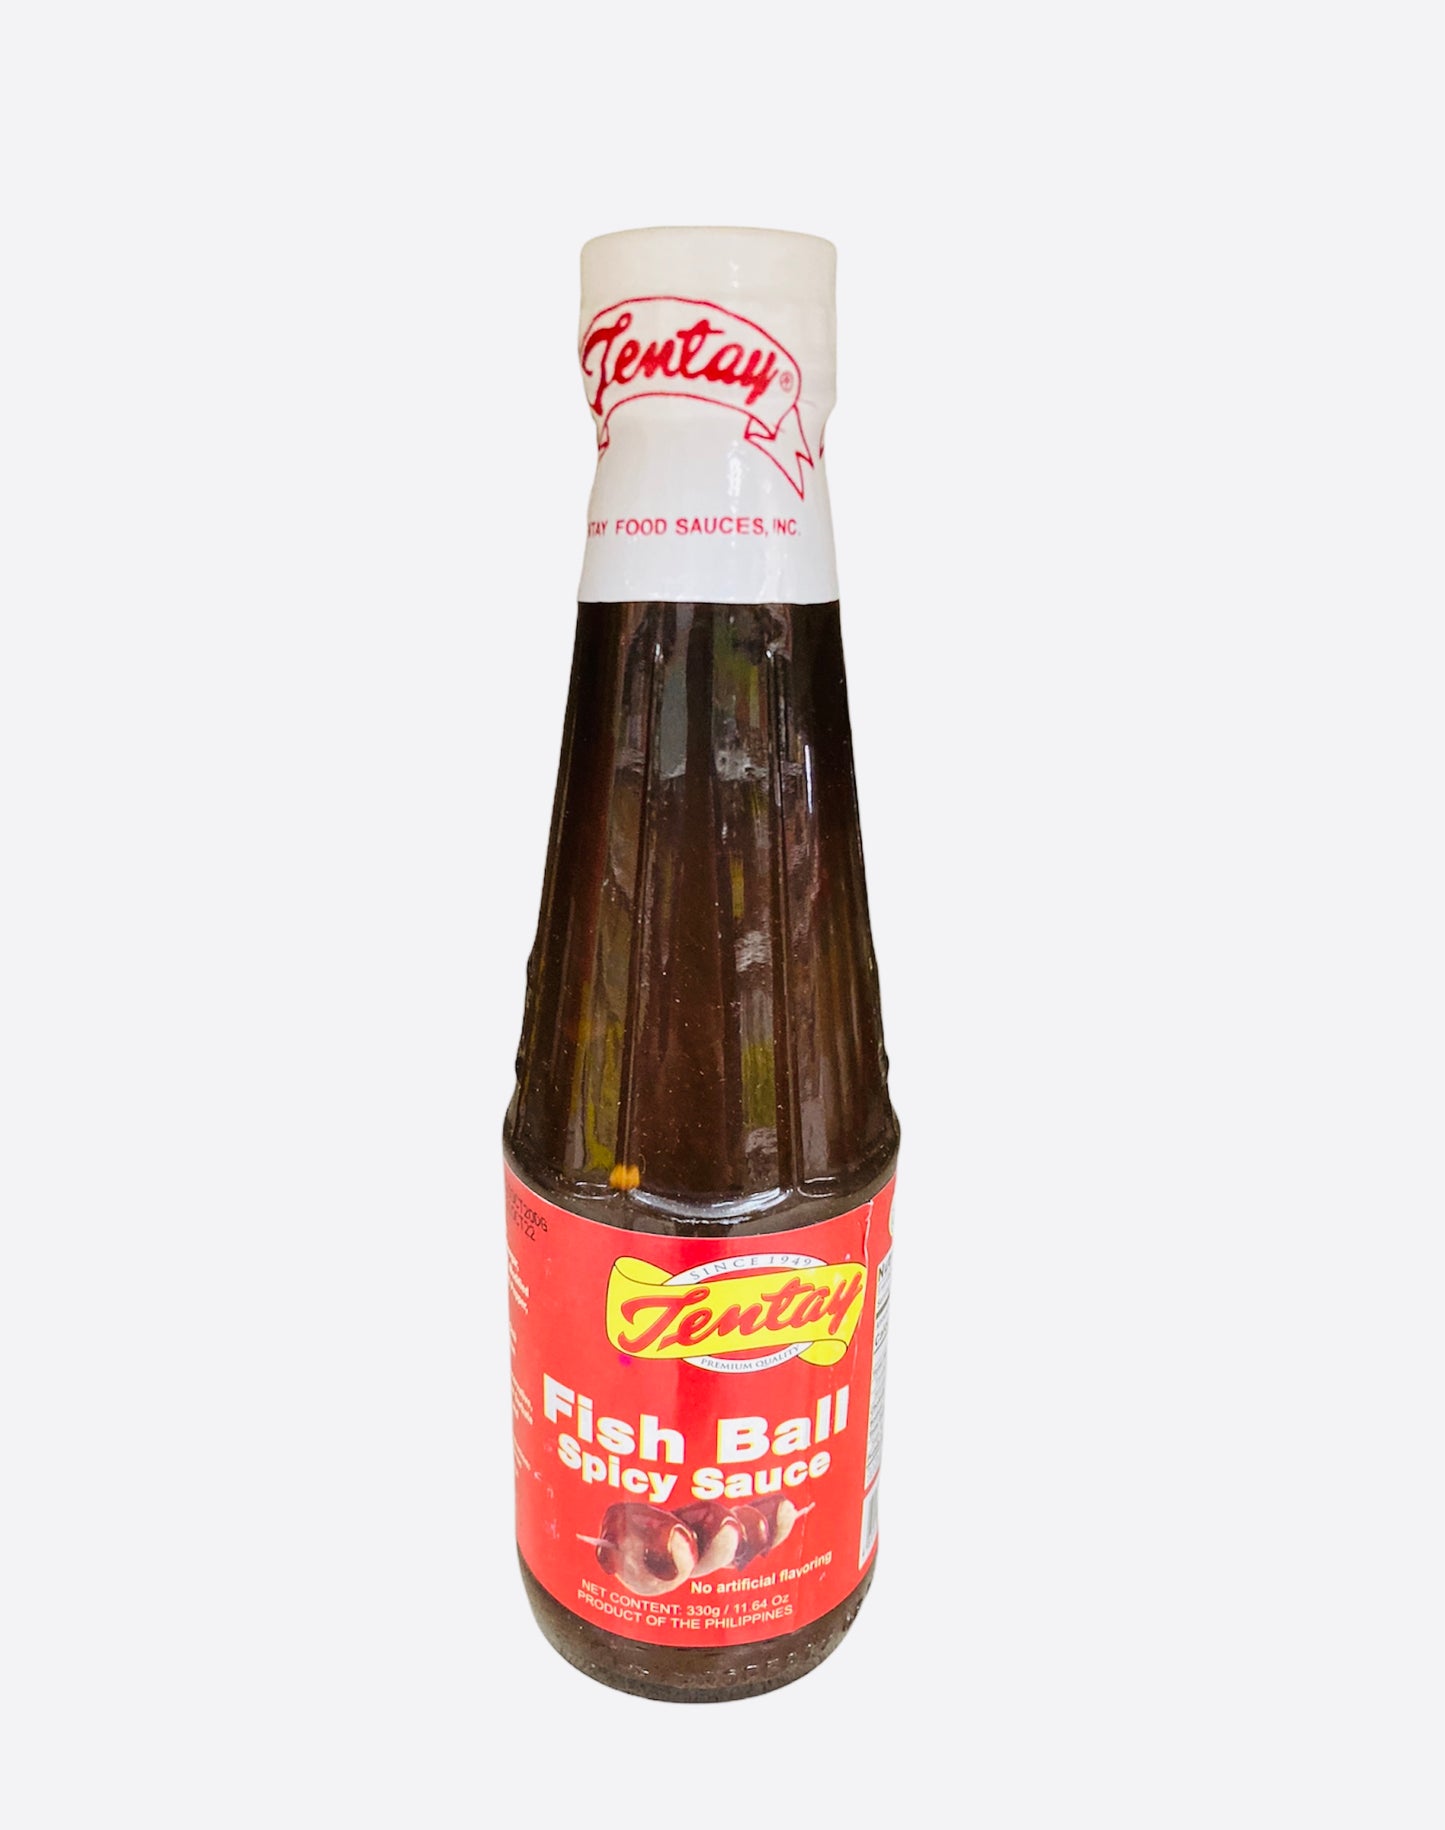 Tentay Fishball Spicy Sauce, 11.64 oz